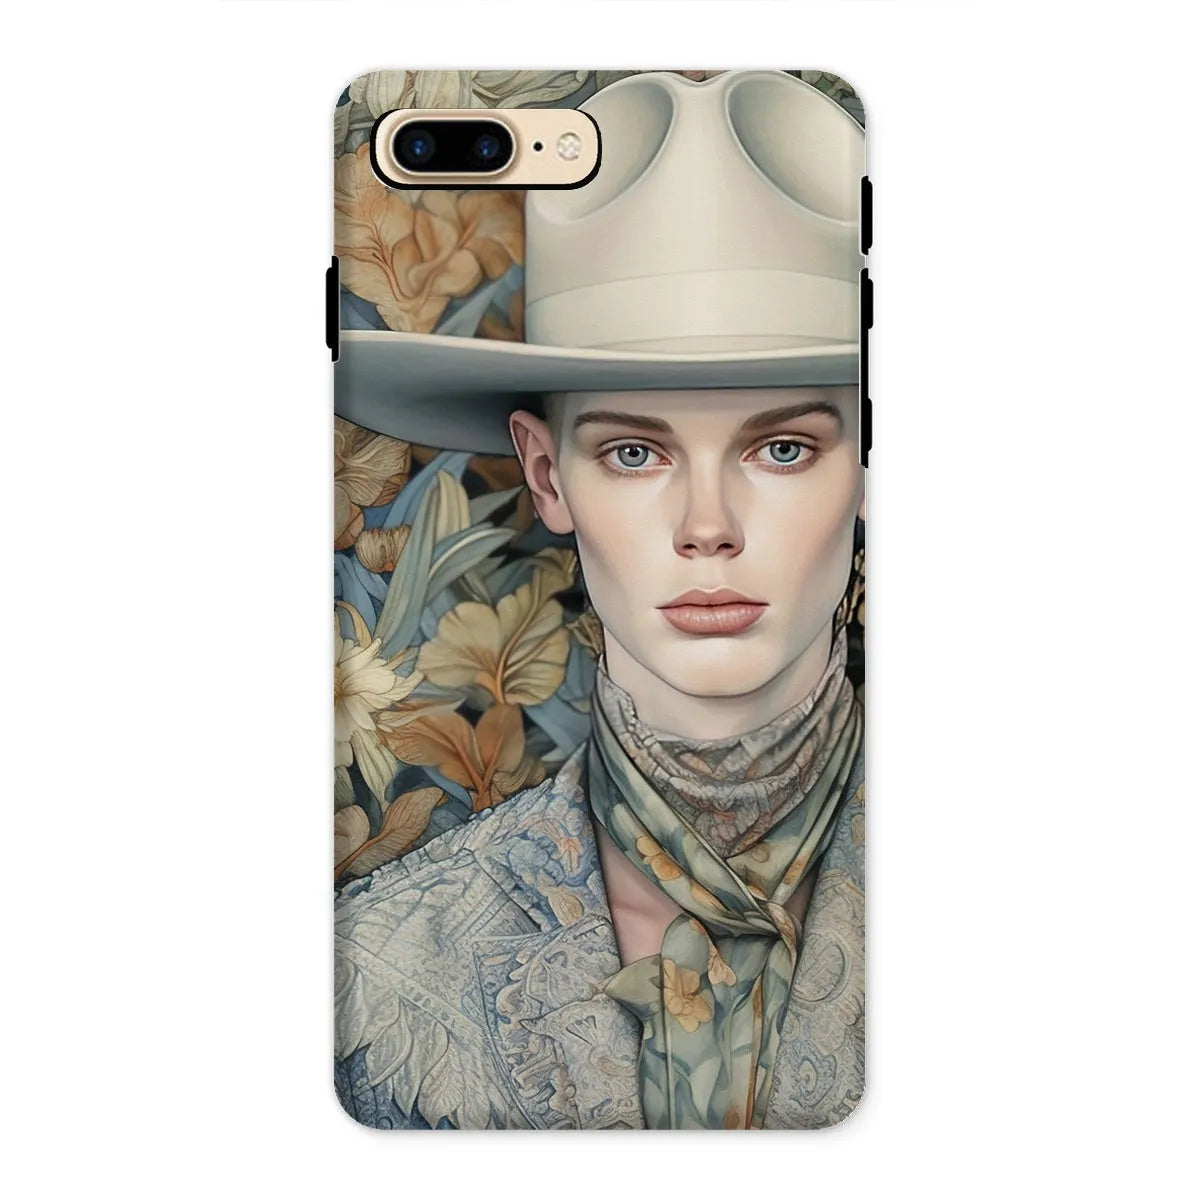 Jasper The Gay Cowboy - Dandy Gay Aesthetic Art Phone Case - Iphone 8 Plus / Matte - Mobile Phone Cases - Aesthetic Art